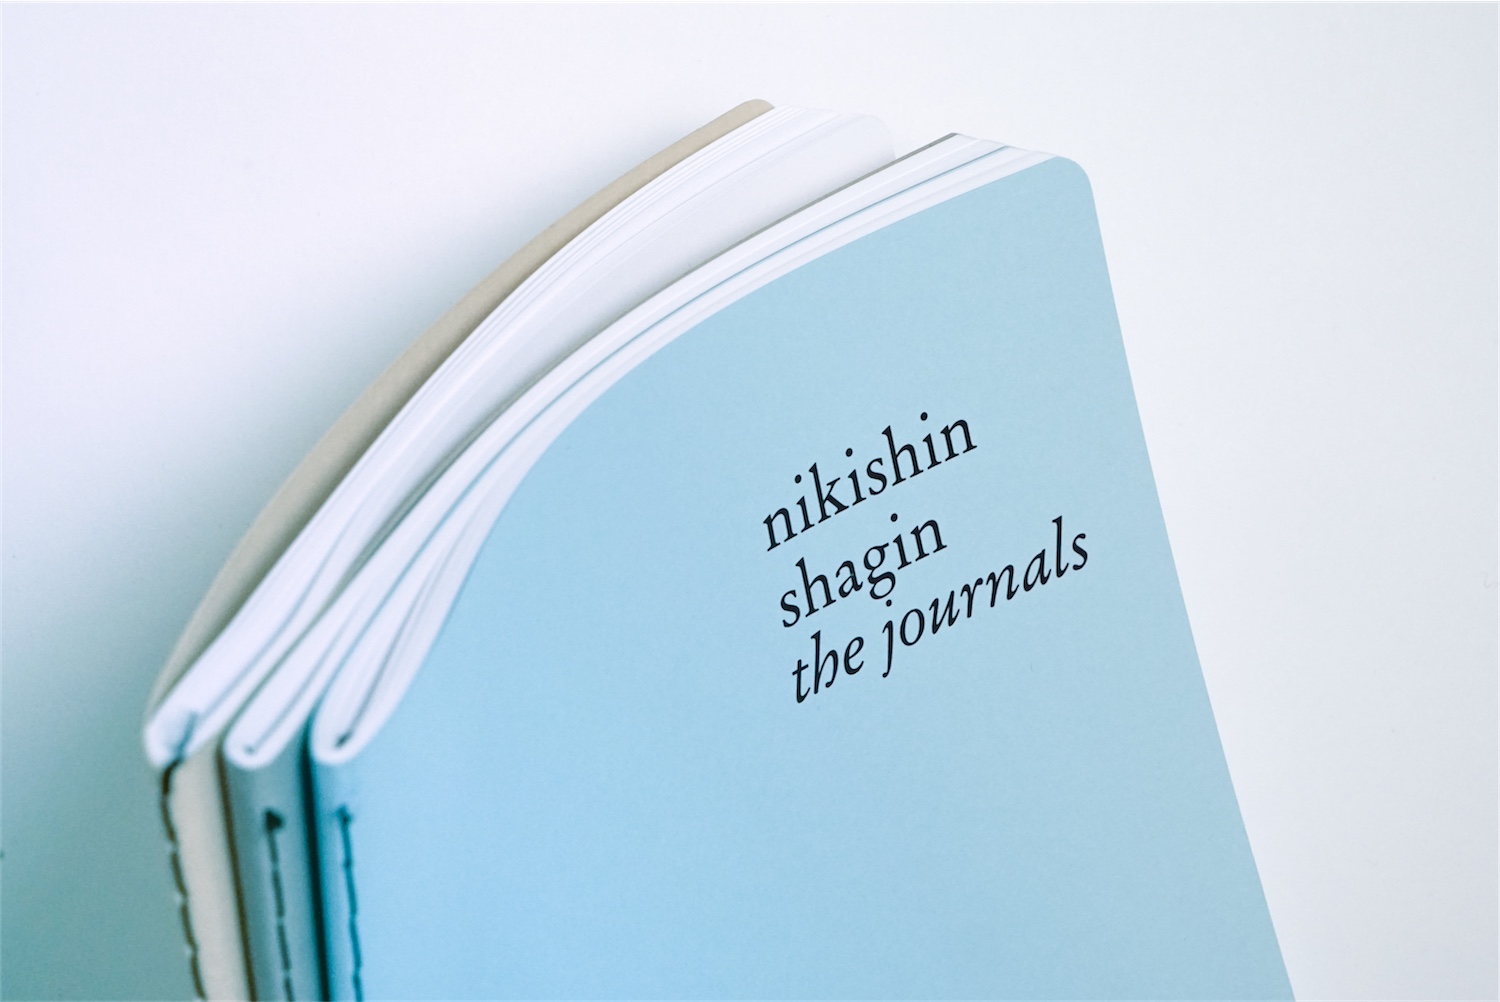 Alexey Nikishin // Books // The Journals